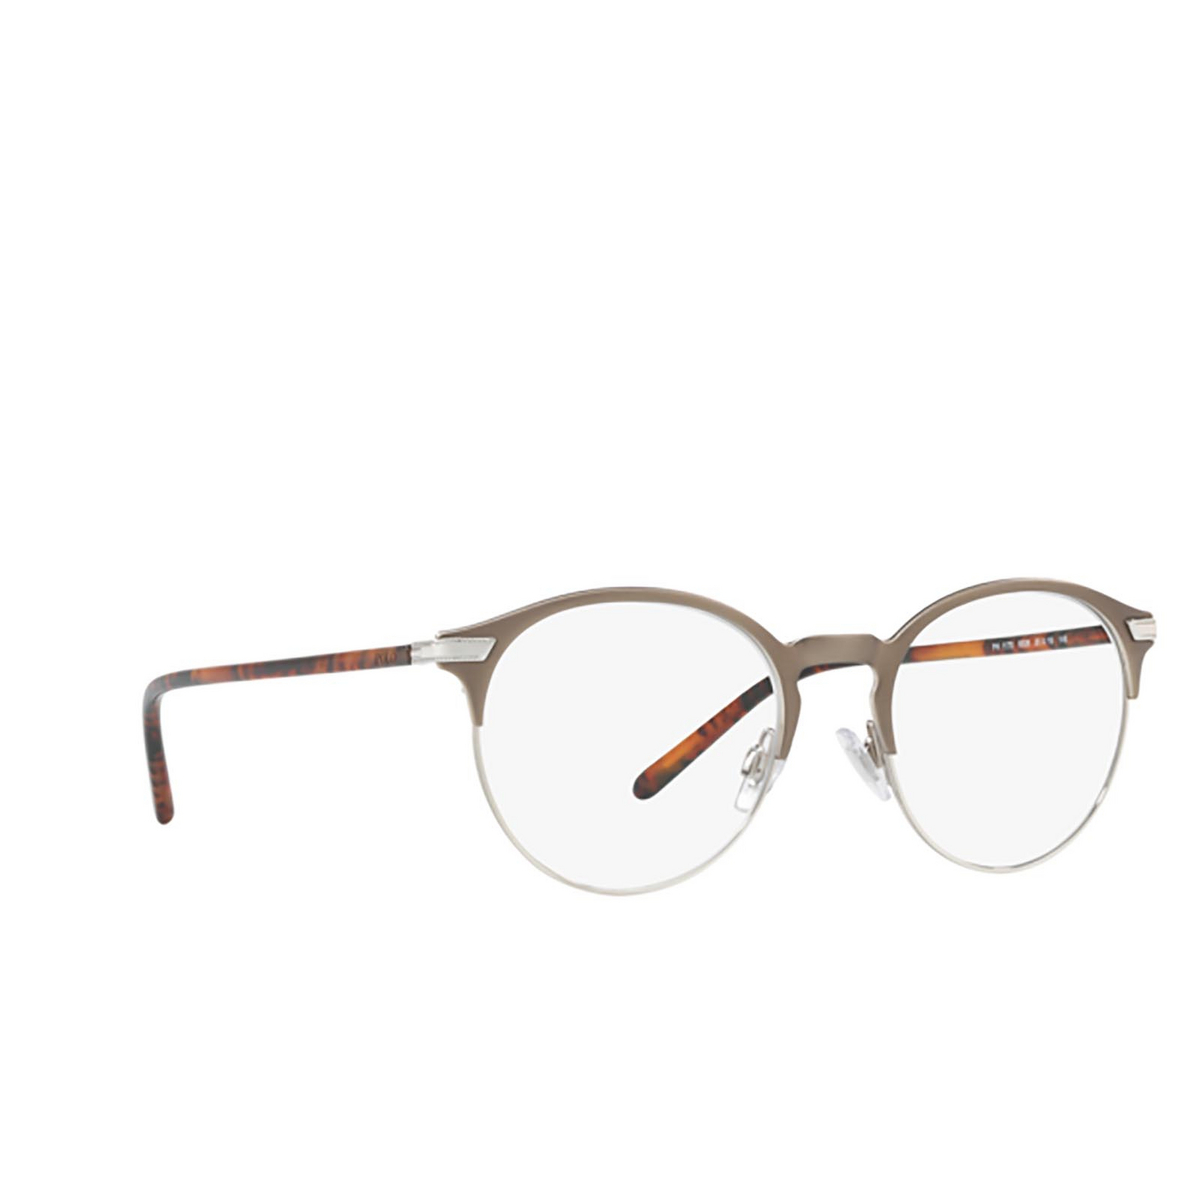 Polo Ralph Lauren® Round Eyeglasses: PH1170 color 9328 - three-quarters view.